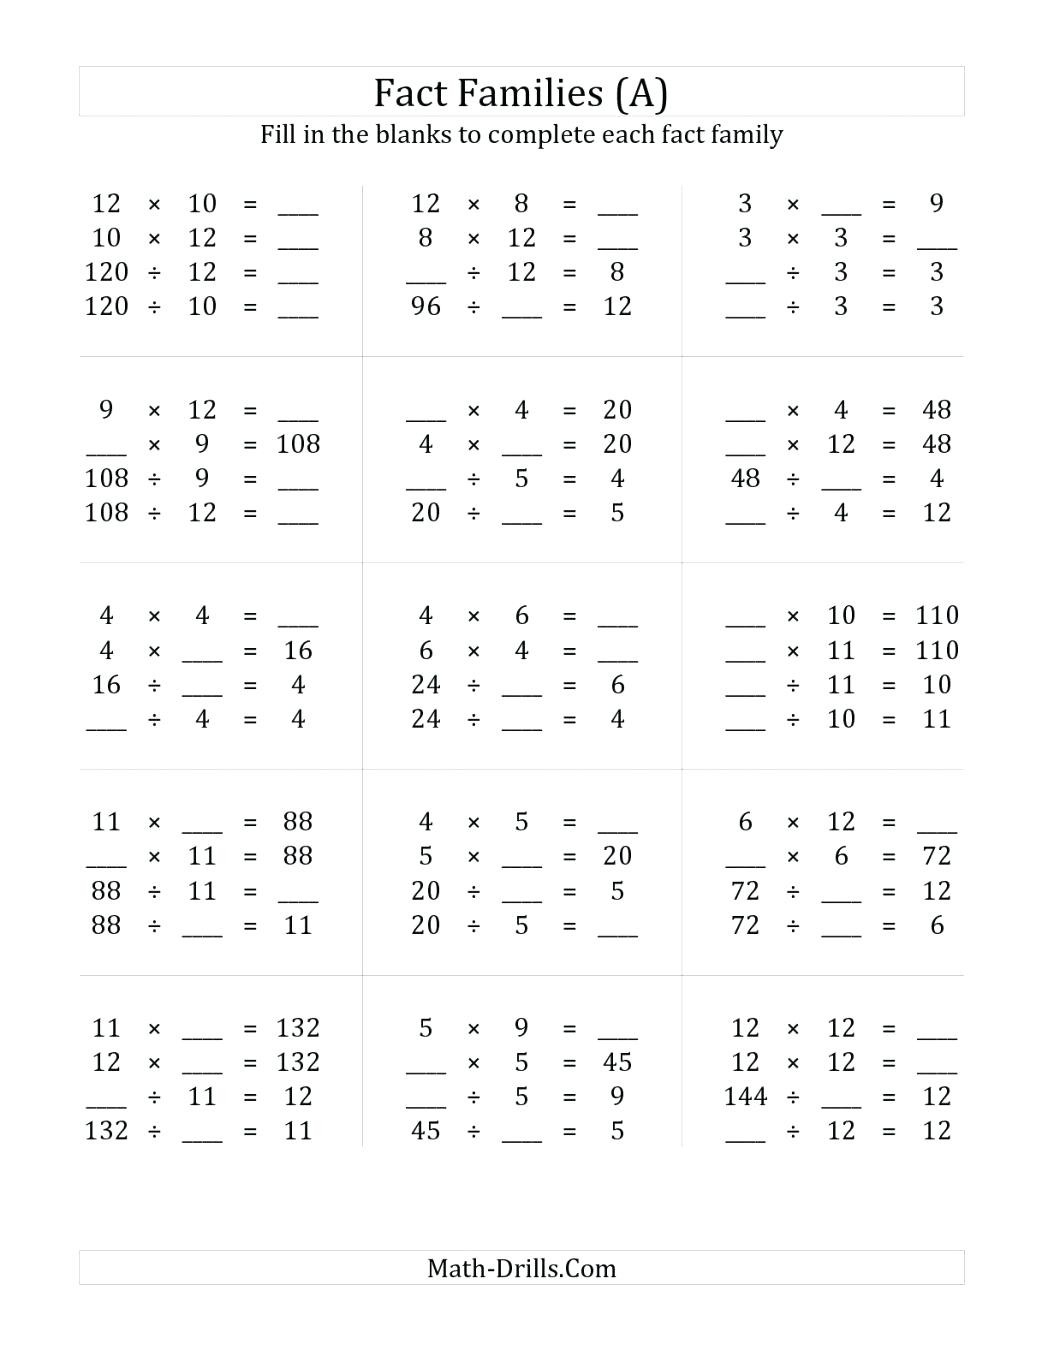 Free Printable Ged Math Worksheets